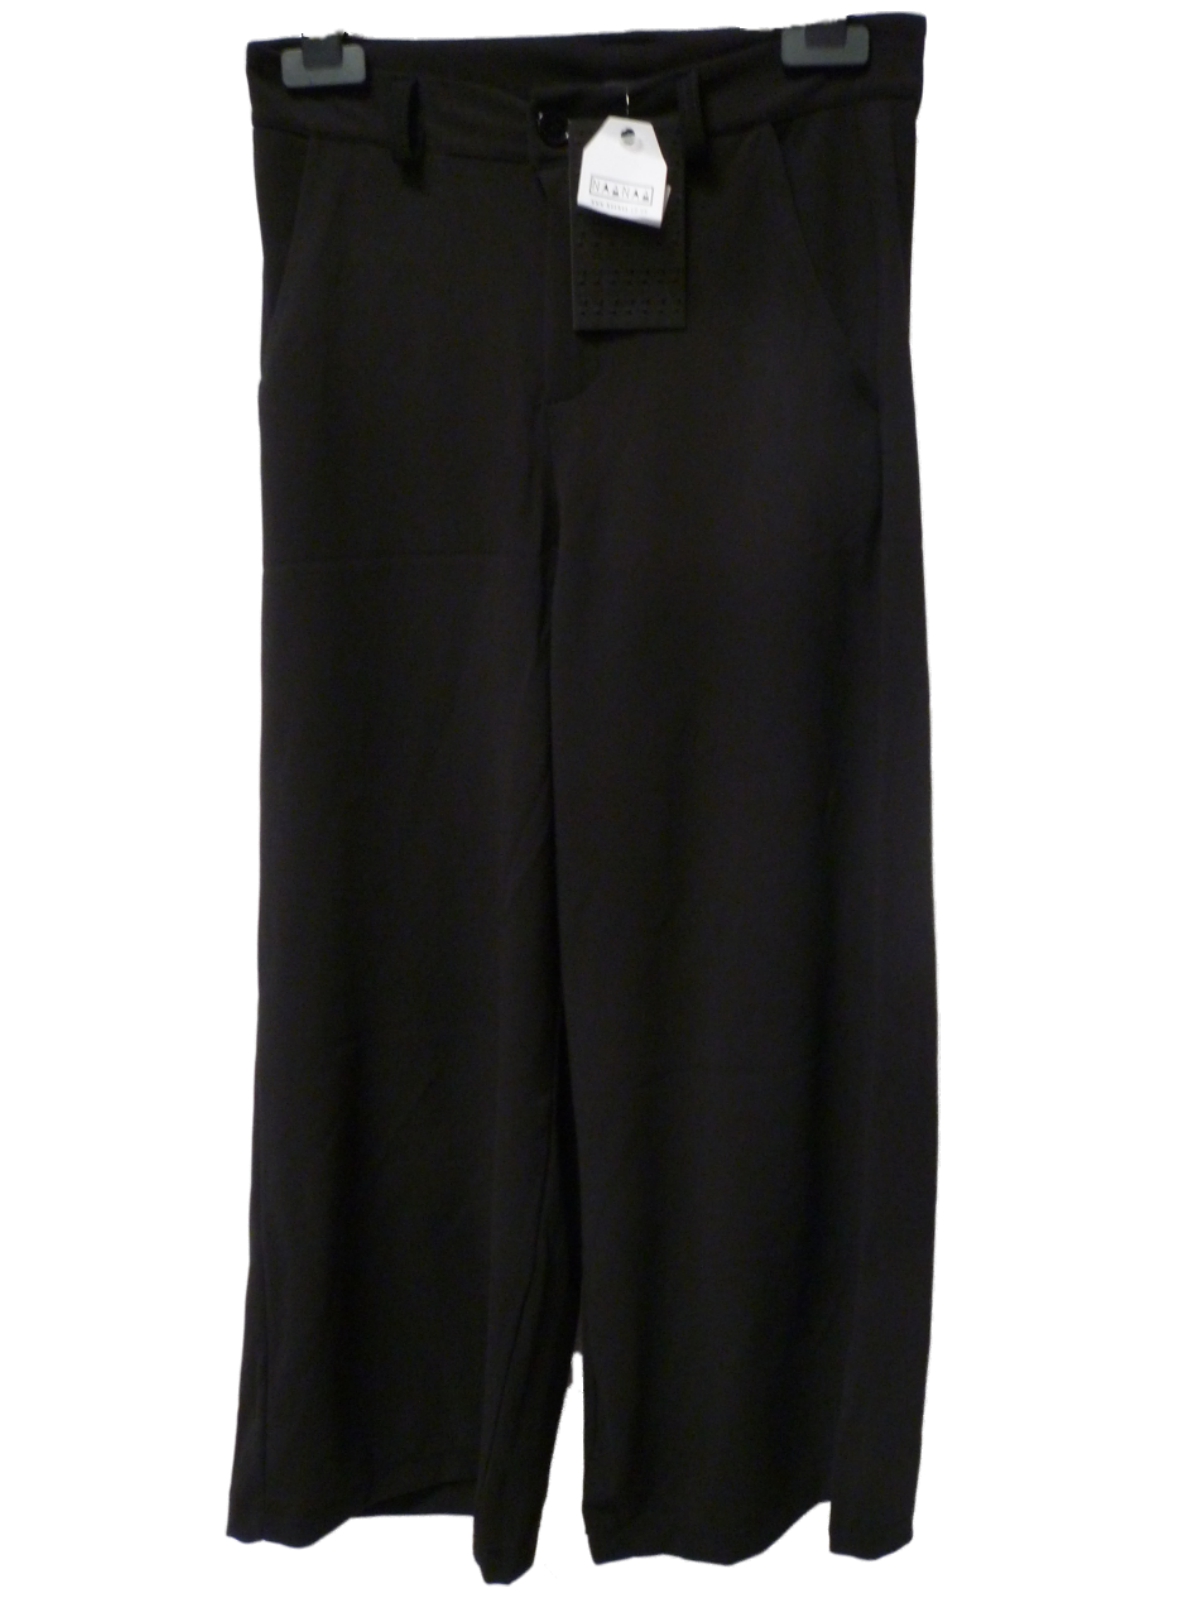 60 Pairs of NaaNaa 3/4 Lengh / Capri Trousers Black Loose Fit  - Bnwt - New